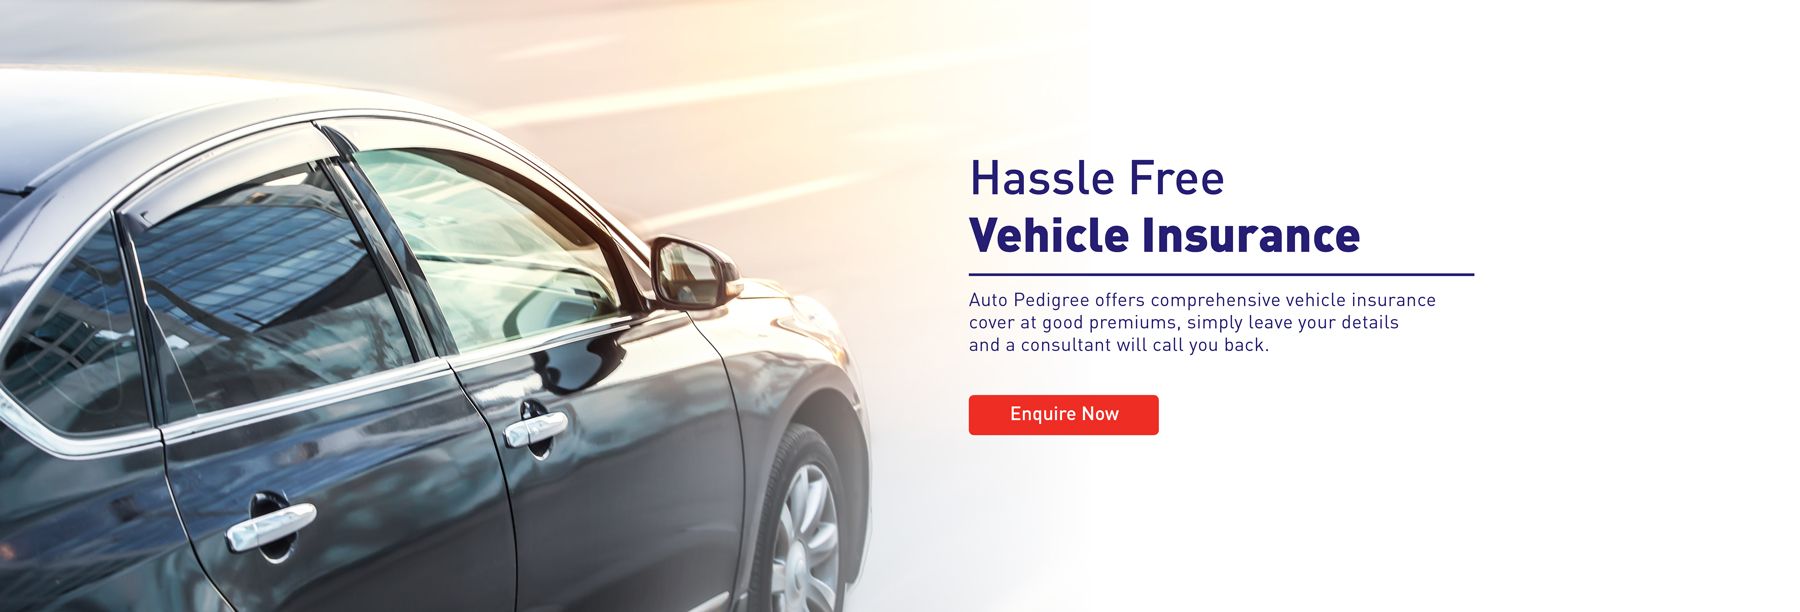 Auto Pedigree Insurance